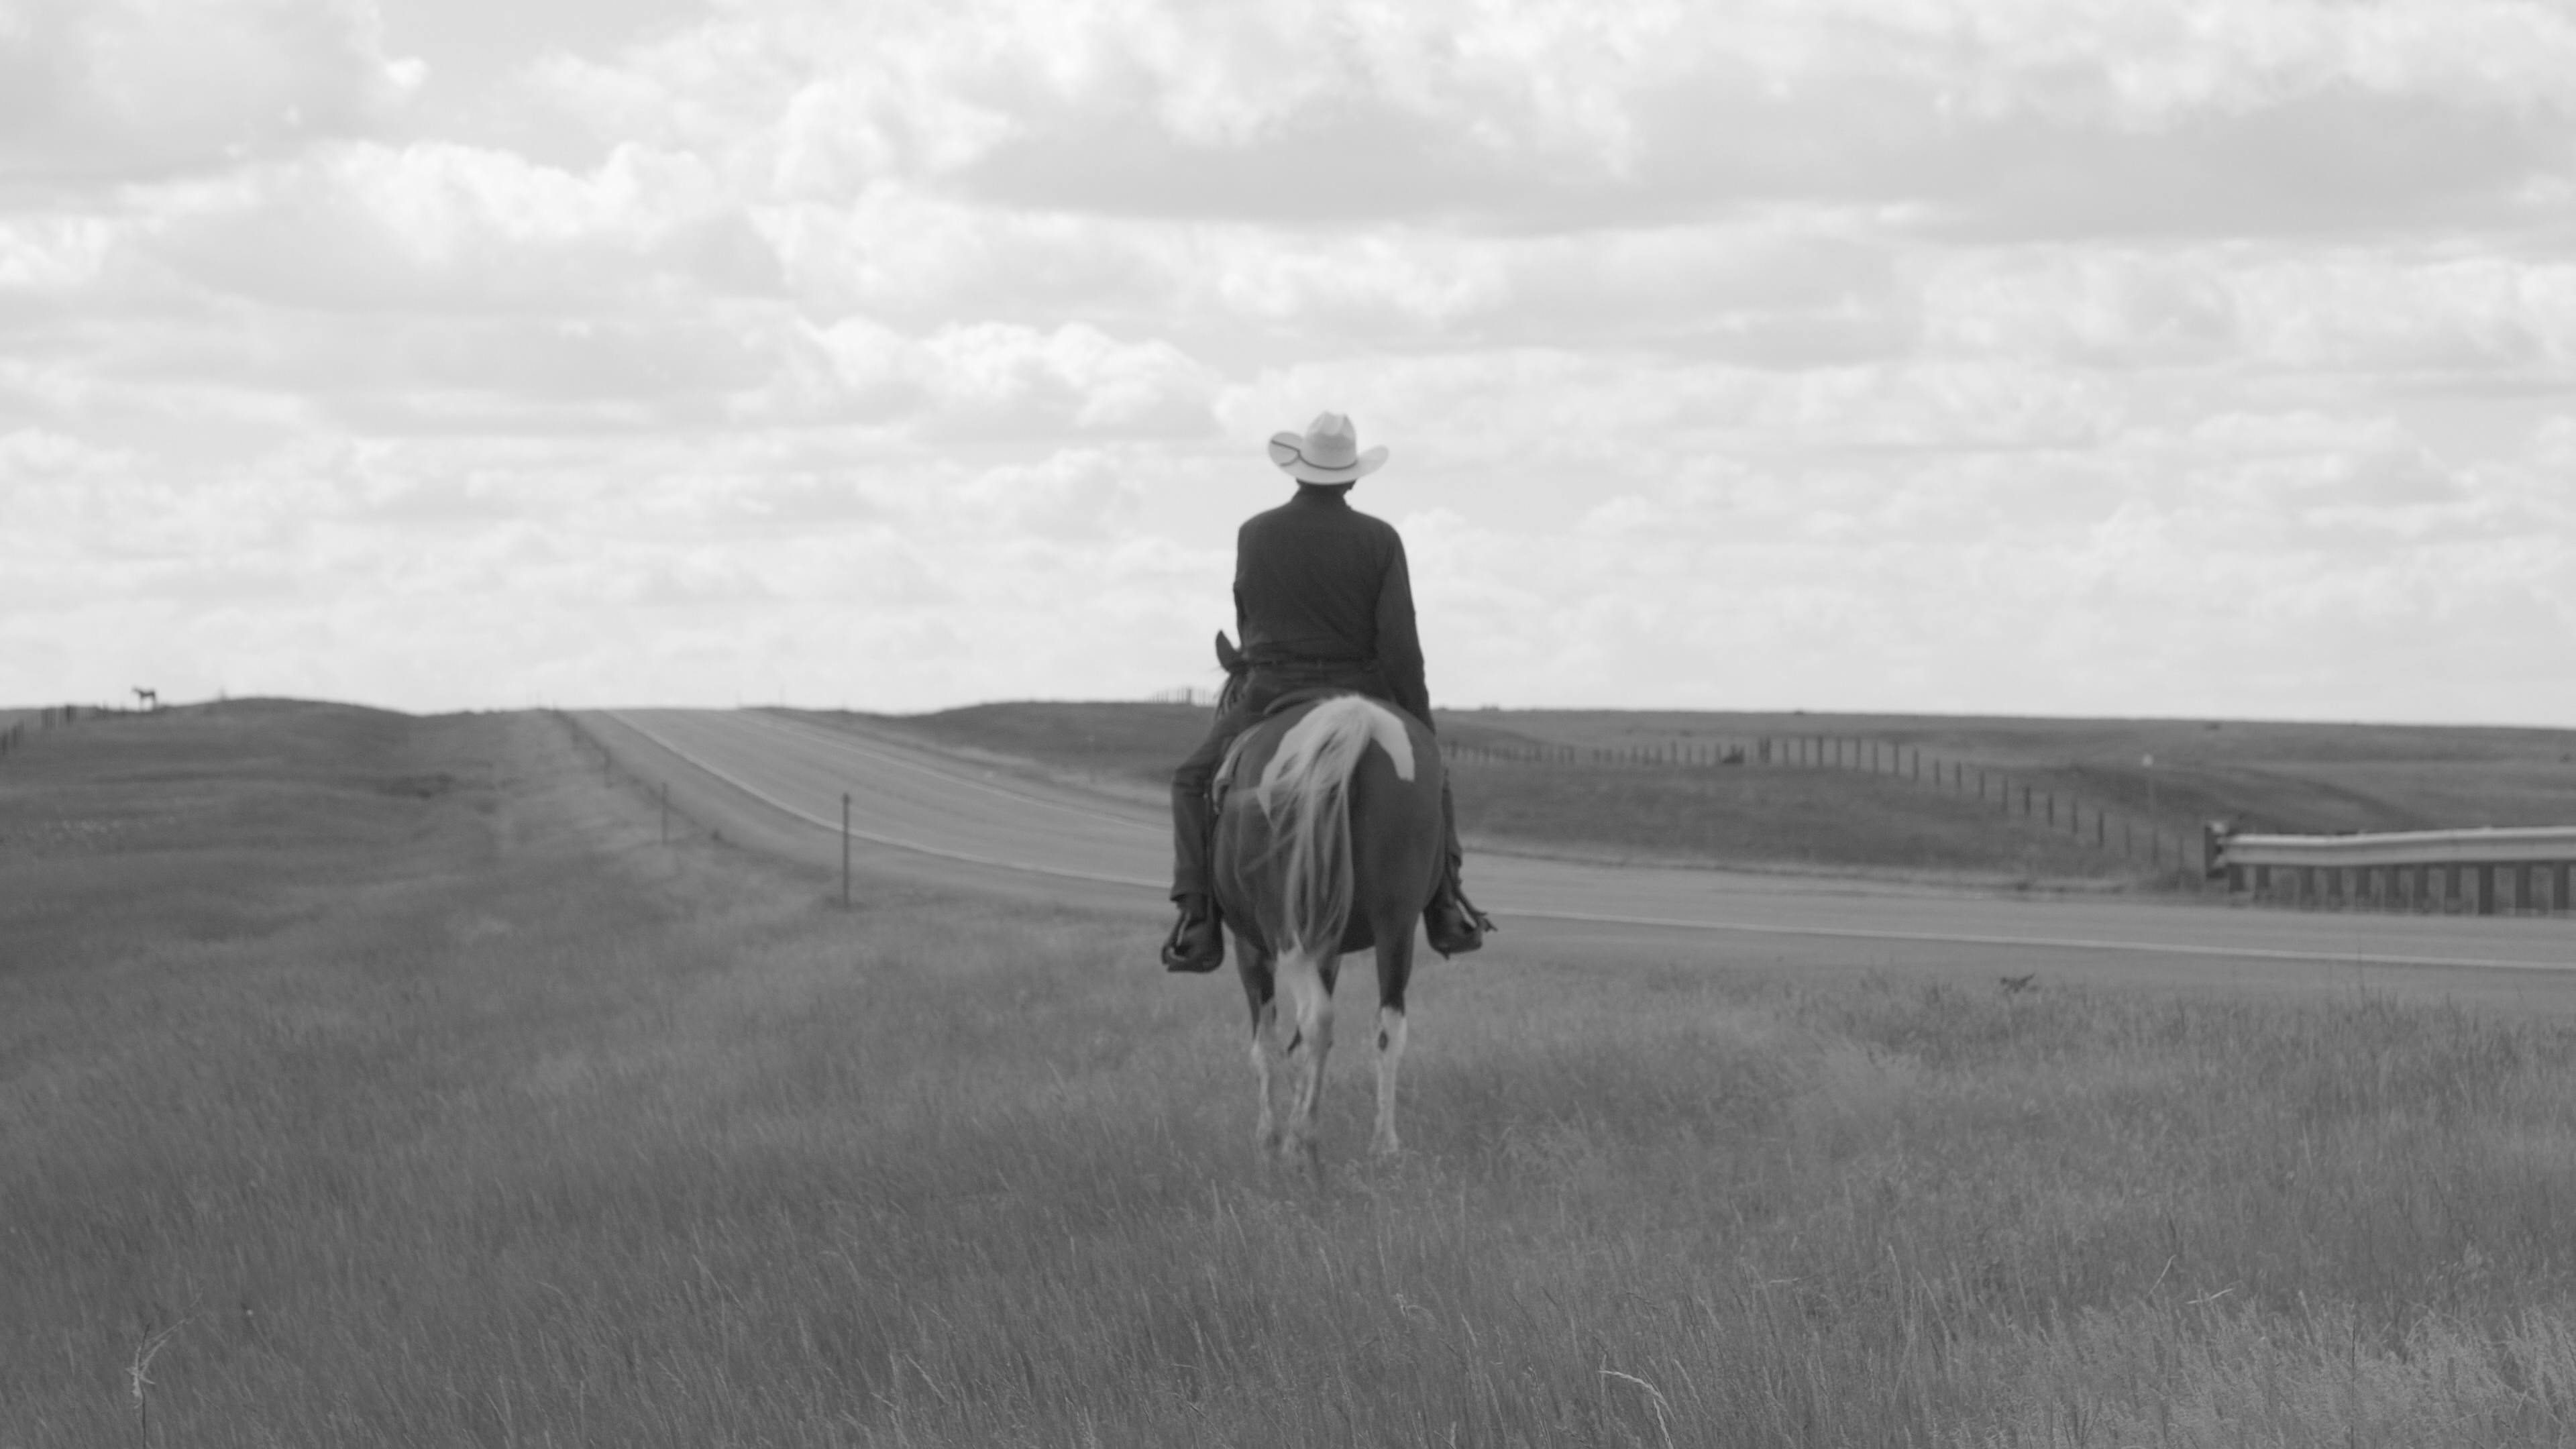 A man wearing a cowboy hat, on horseback in the center of a roadside field.